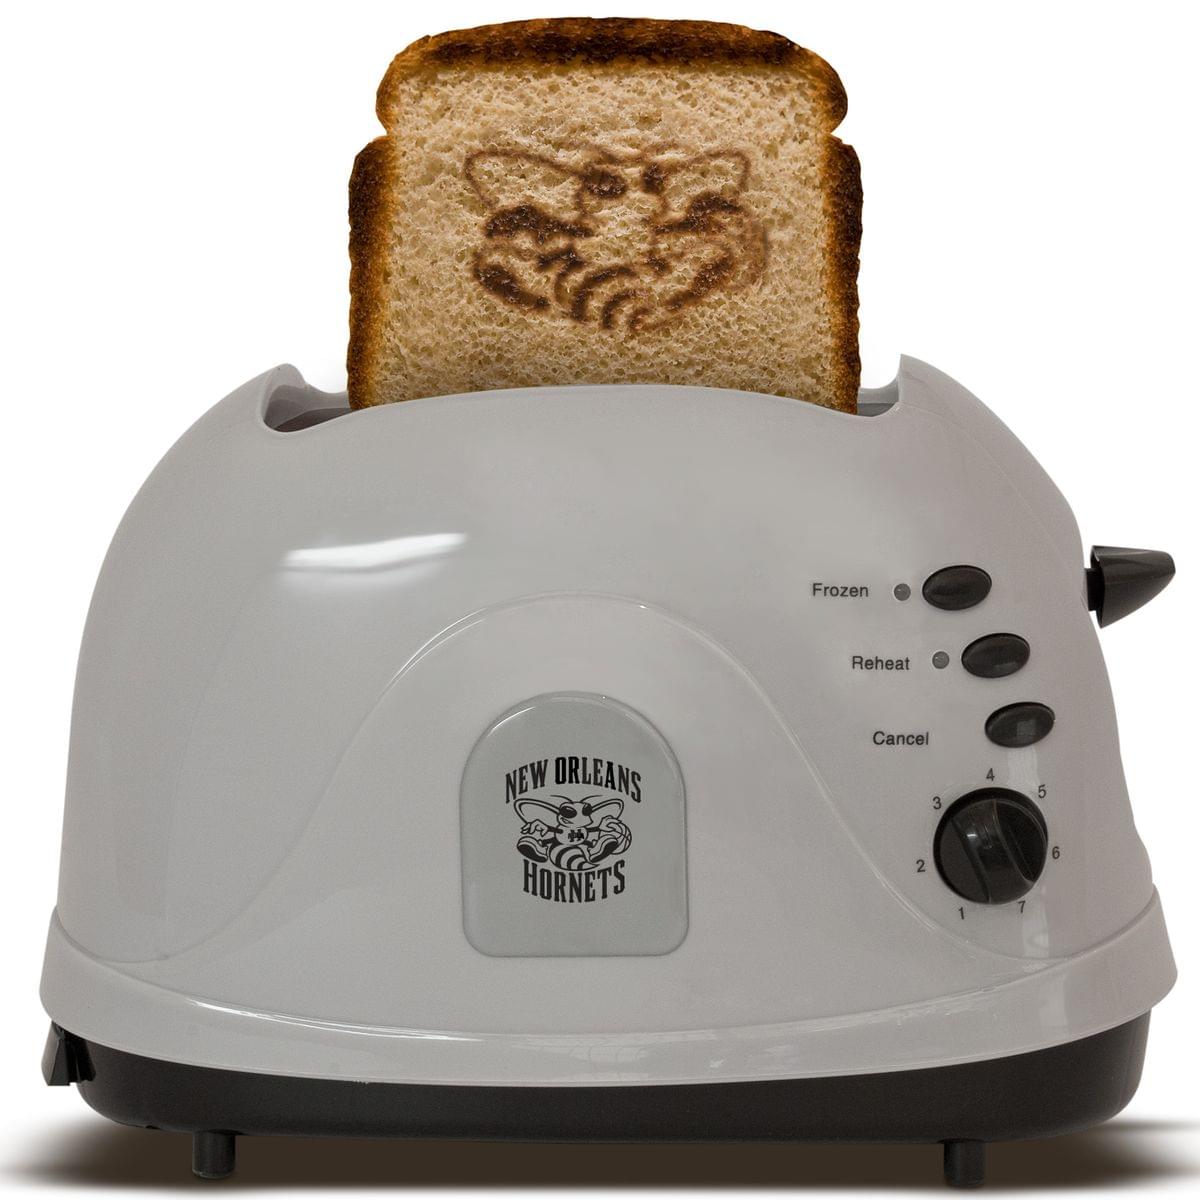 New Orleans Hornets NBA ProToast Toaster